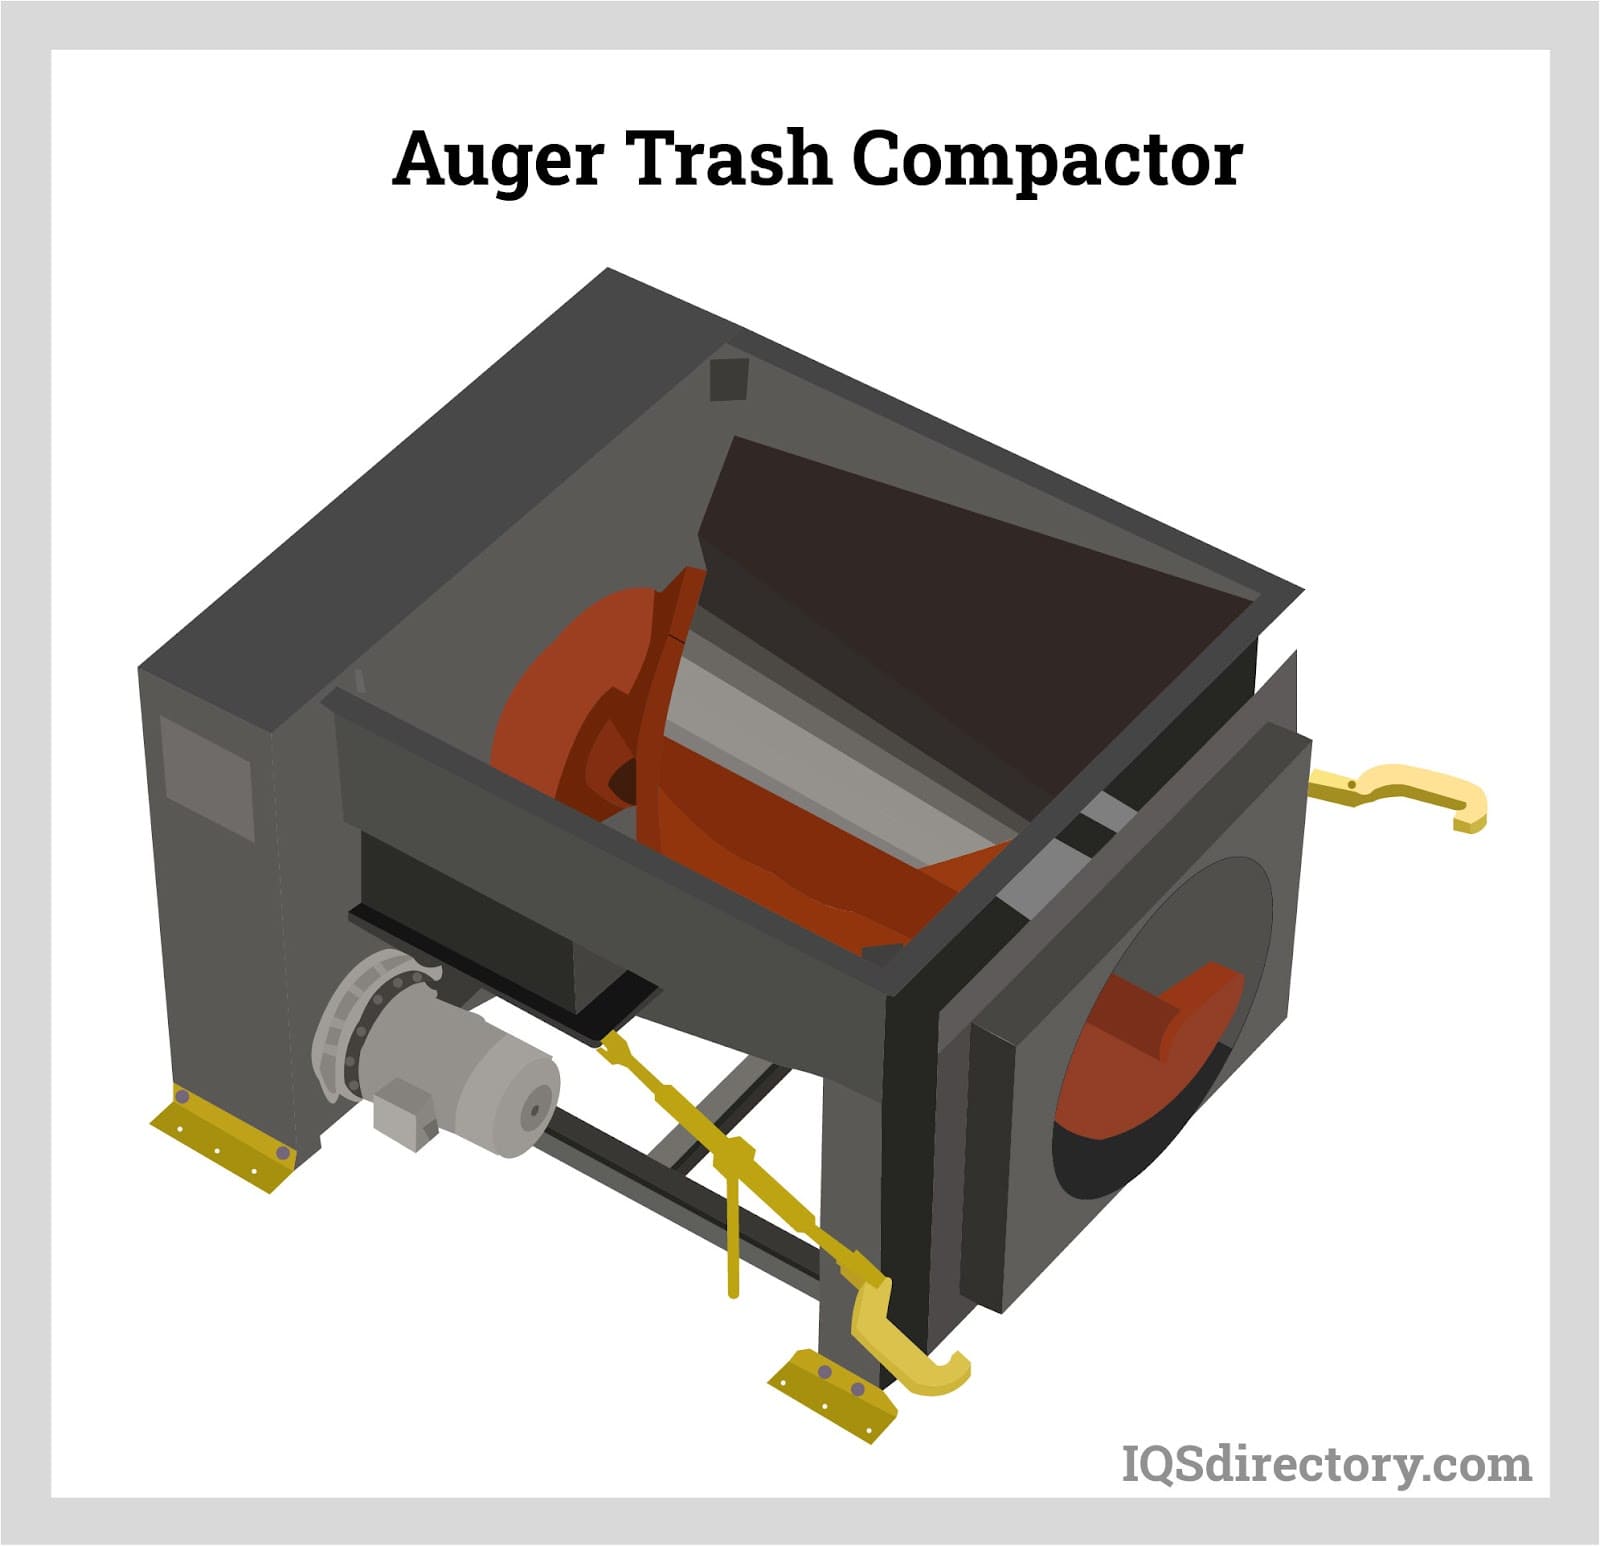 https://www.iqsdirectory.com/articles/baler/compactors/auger-trash-compactor.jpg